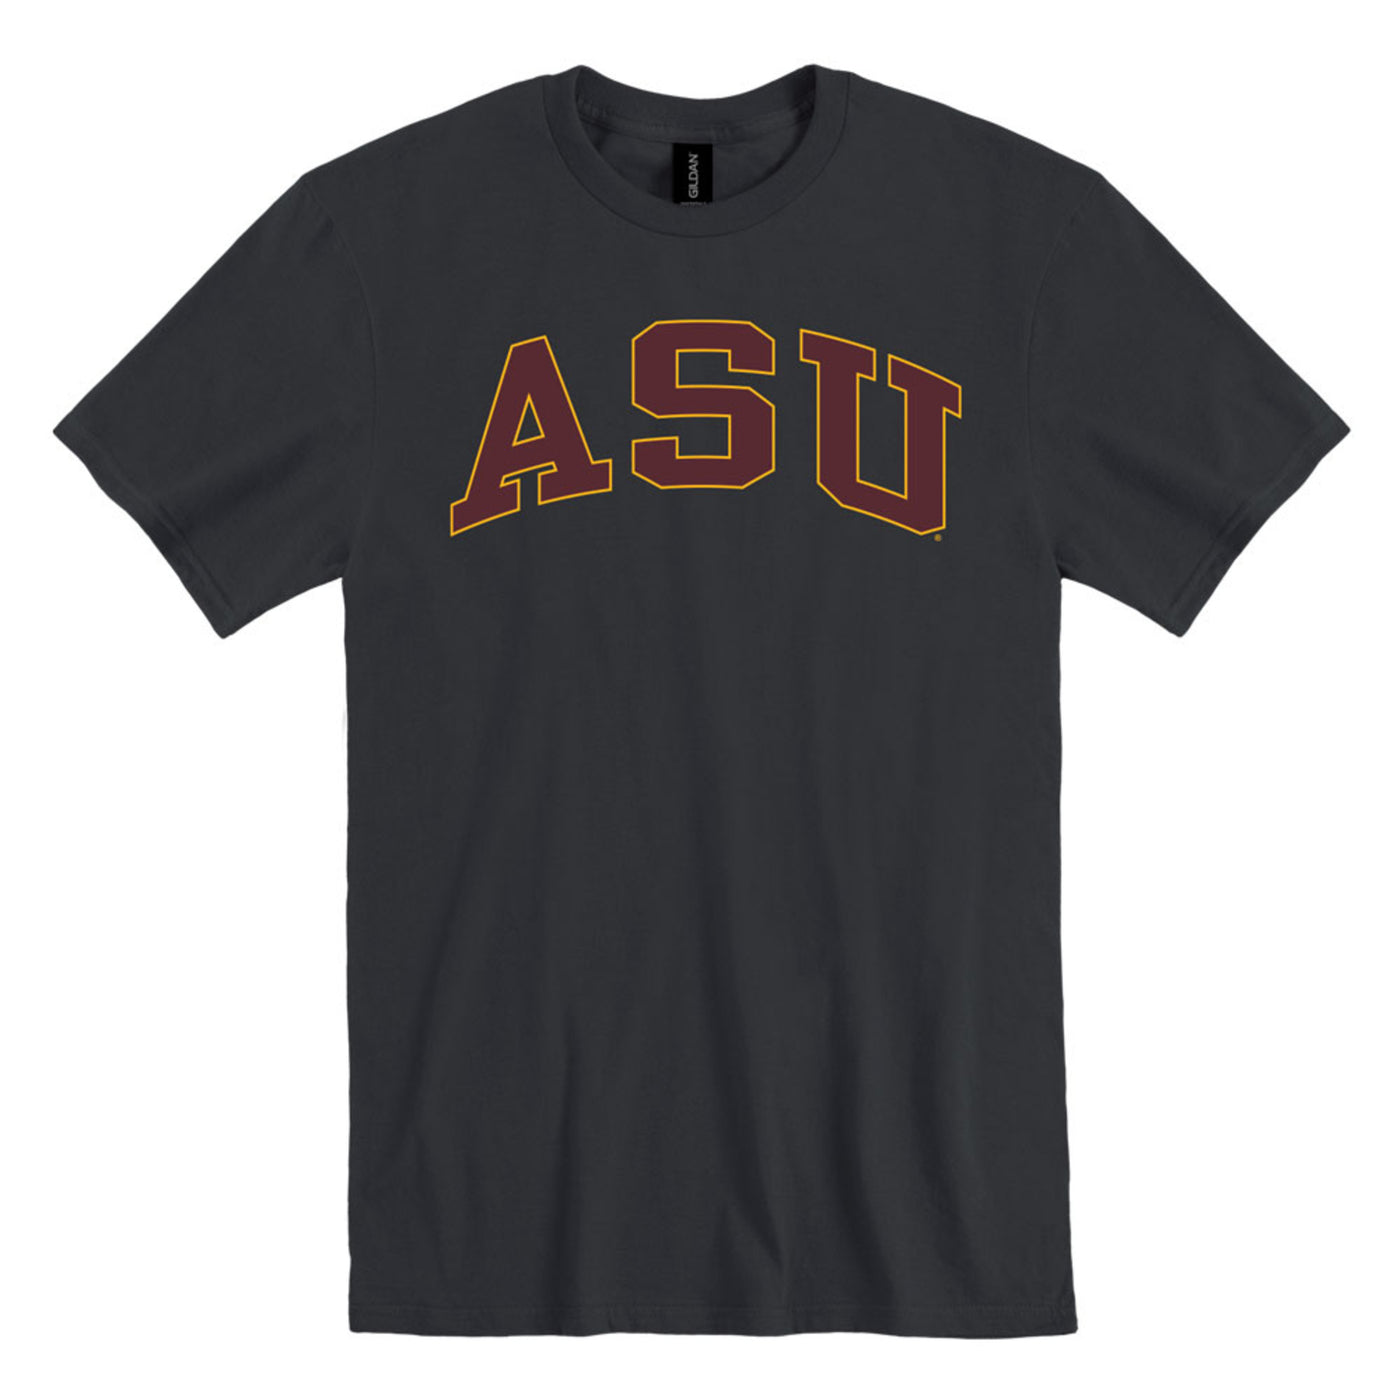 ASU black shirt with the text 